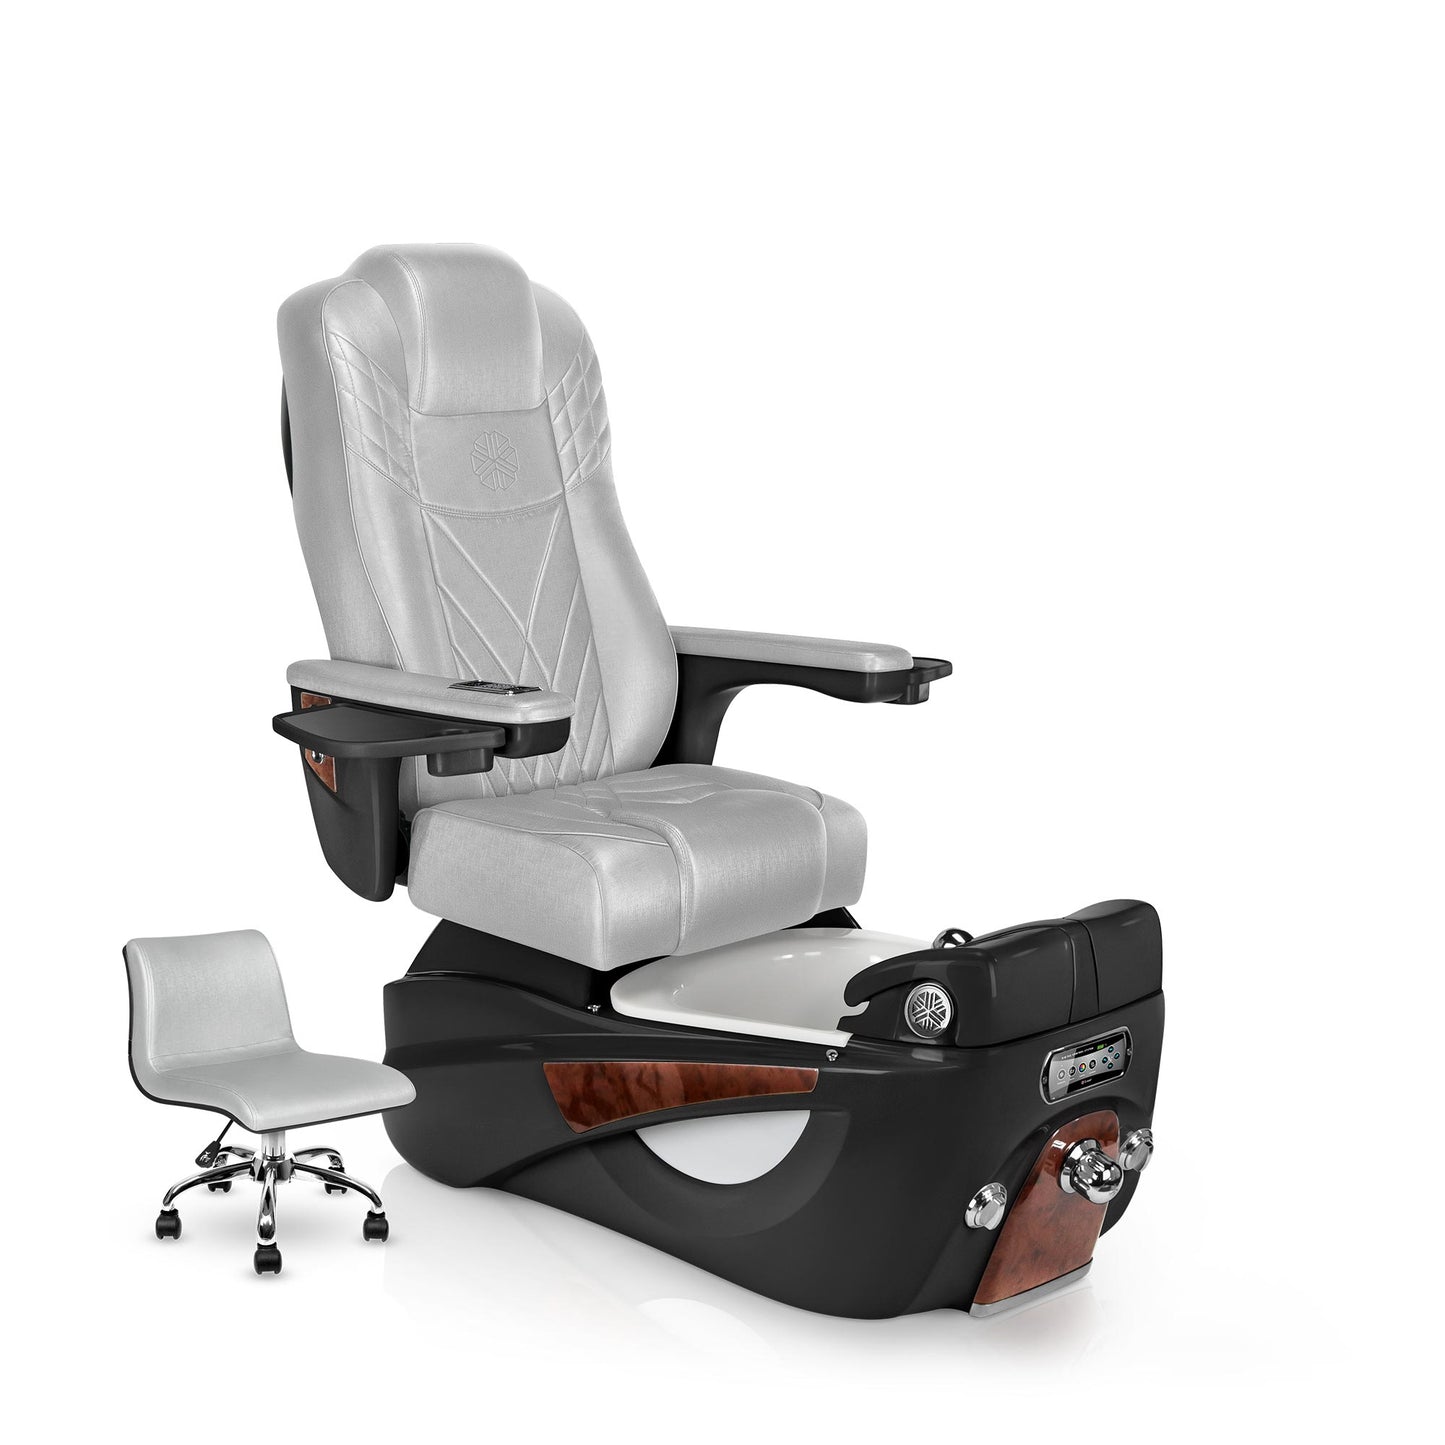 Lexor LUMINOUS pedicure chair with platinum cushion and espresso spa base